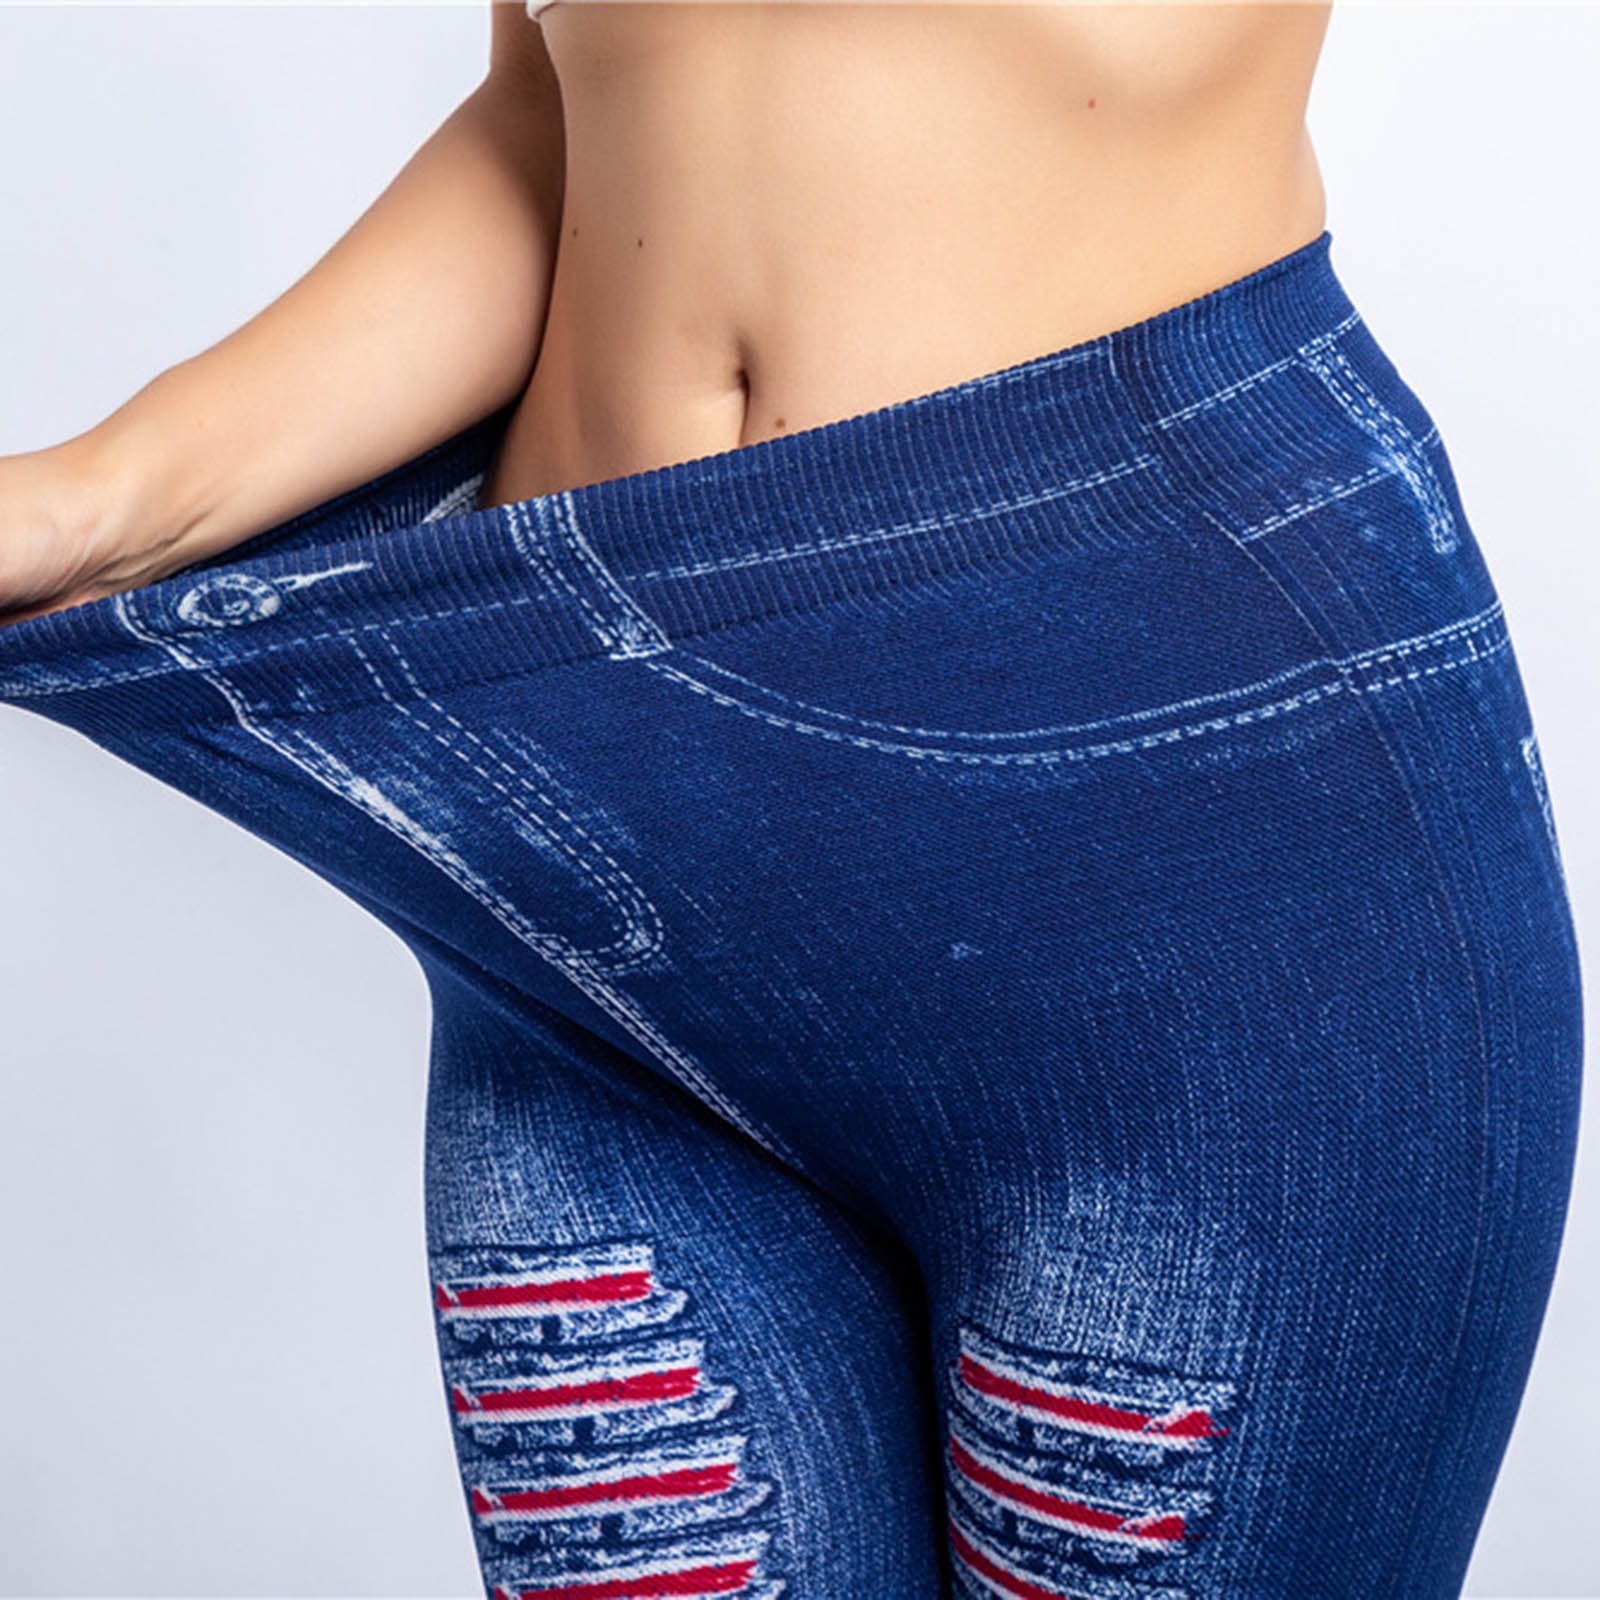 Women's Denim Print Fake Jeans Look Like Leggings Sexy Stretchy High Waist  Slim Skinny Jeggings Tights for Women 